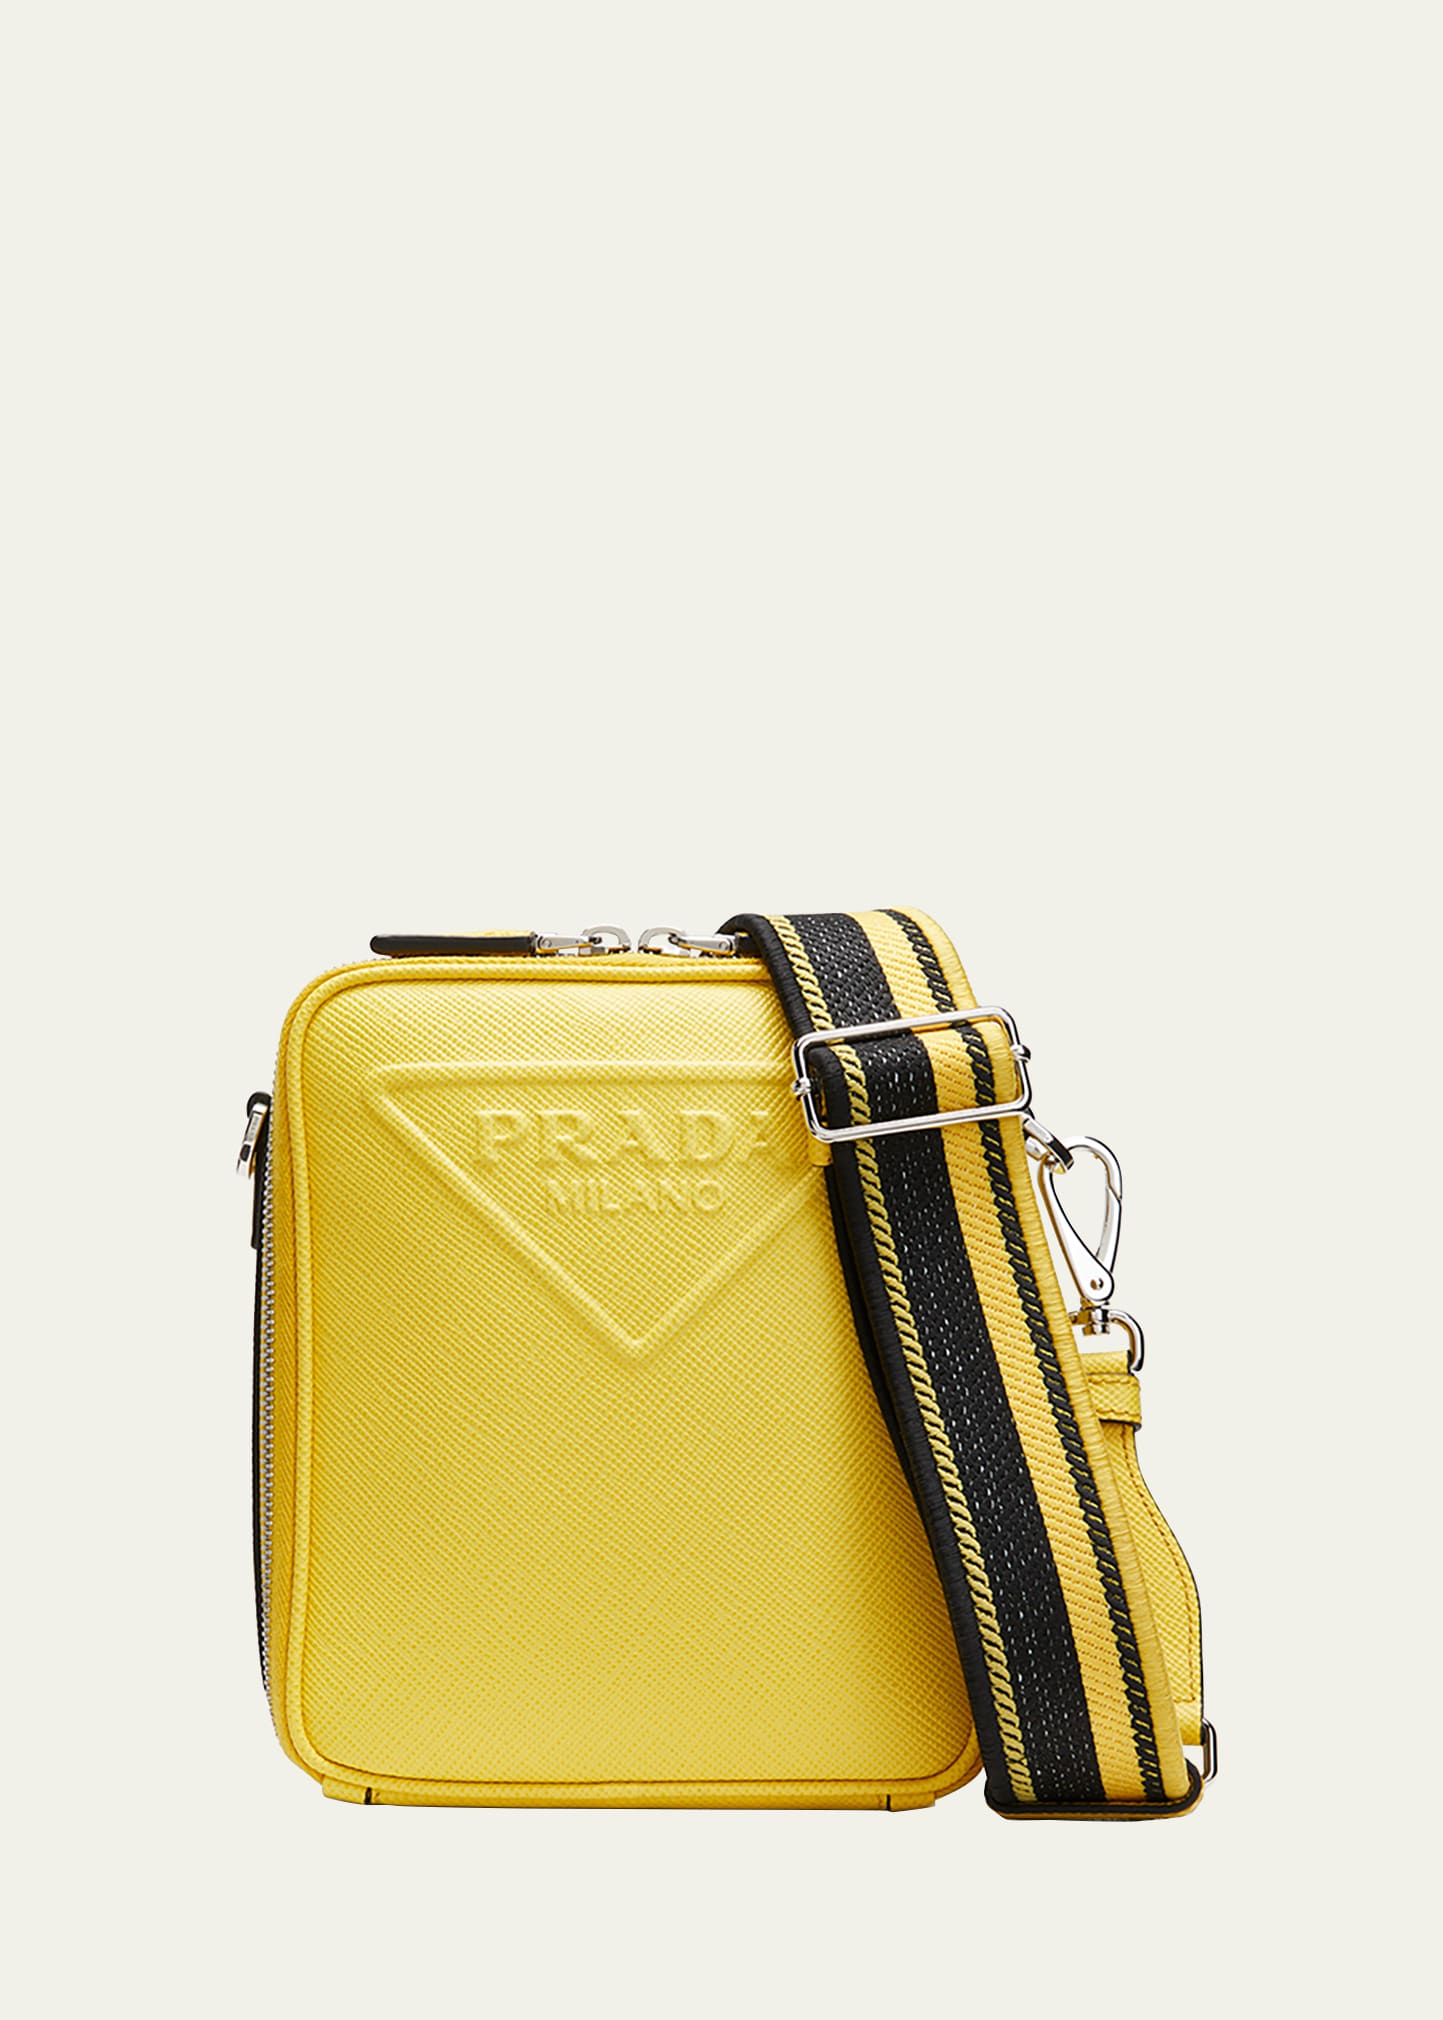 Prada Men's Saffiano Leather Shoulder Crossbody Bag In F0377 Sole